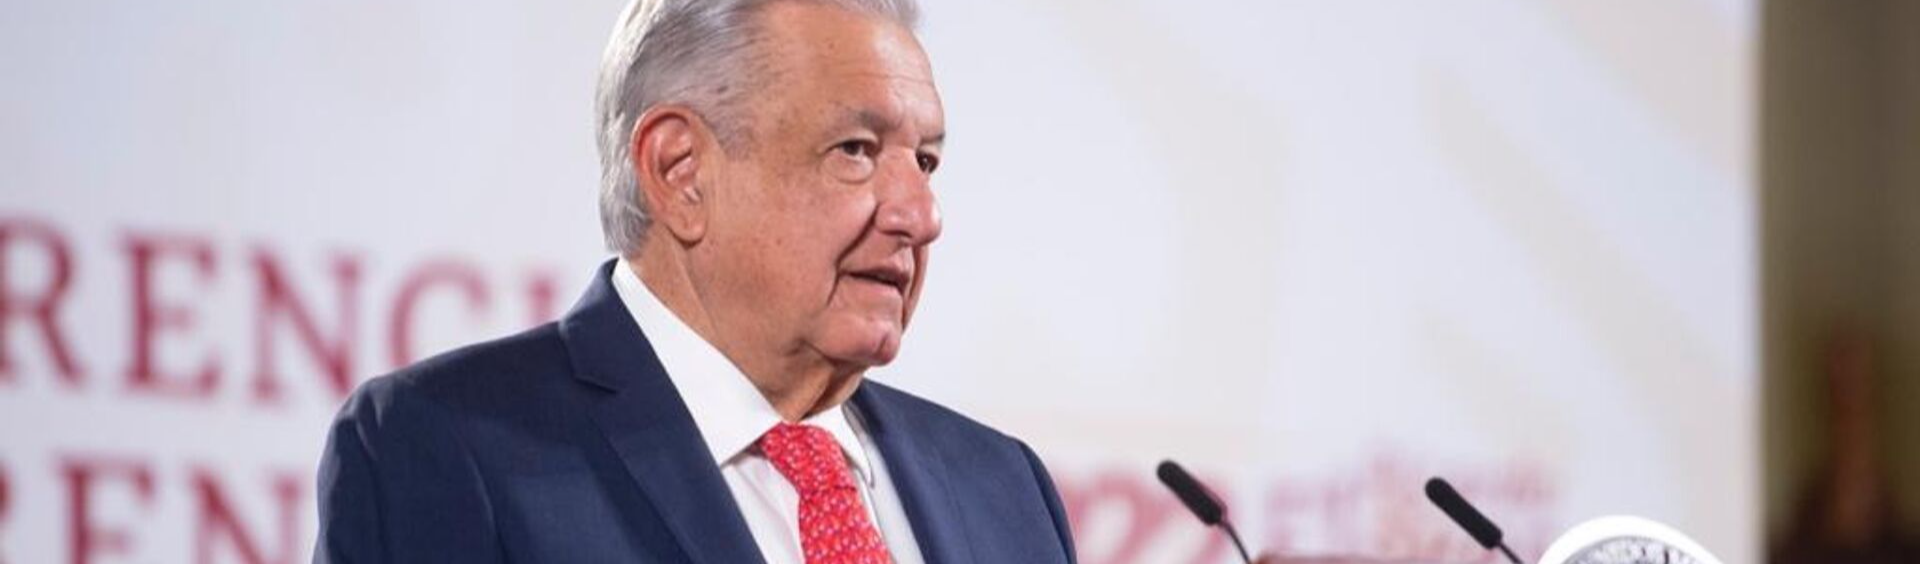 Entenda proposta de Obrador para reformar e democratizar sistema eleitoral no México